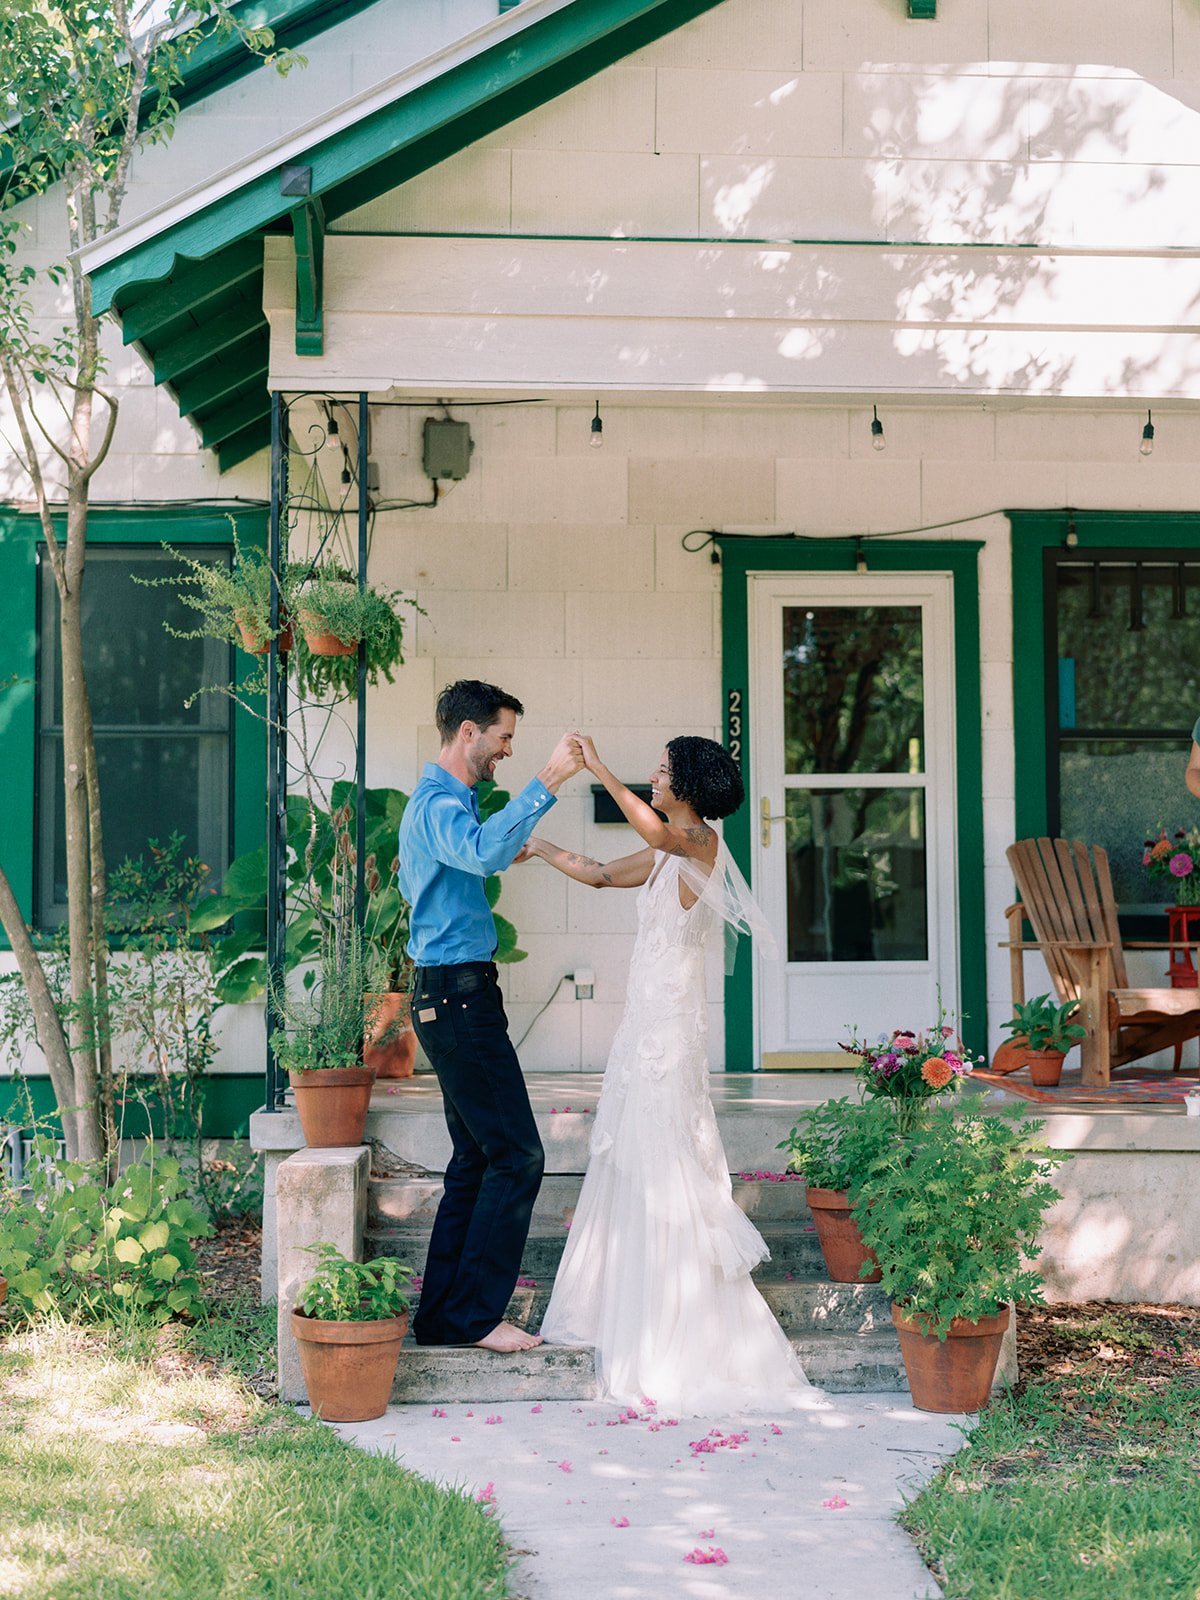 Best-Austin-Wedding-Photographers-Elopement-Film-35mm-Asheville-Santa-Barbara-17.jpg